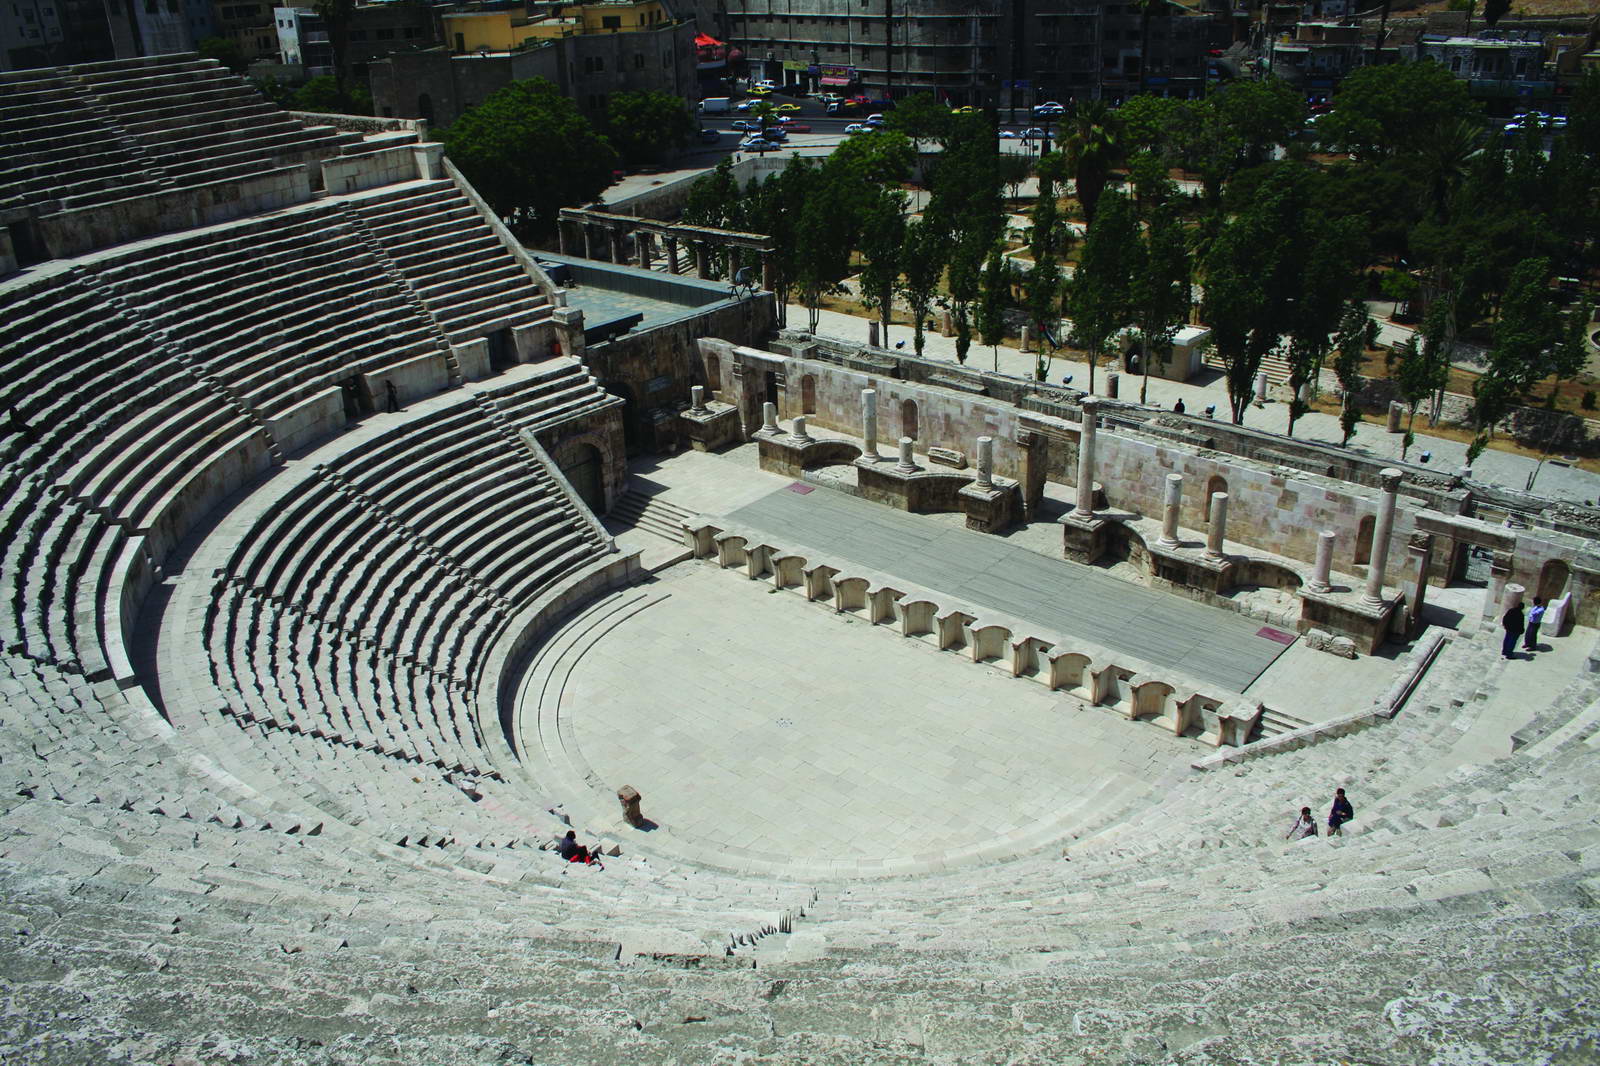 The Roman Theater in Amman Jordan